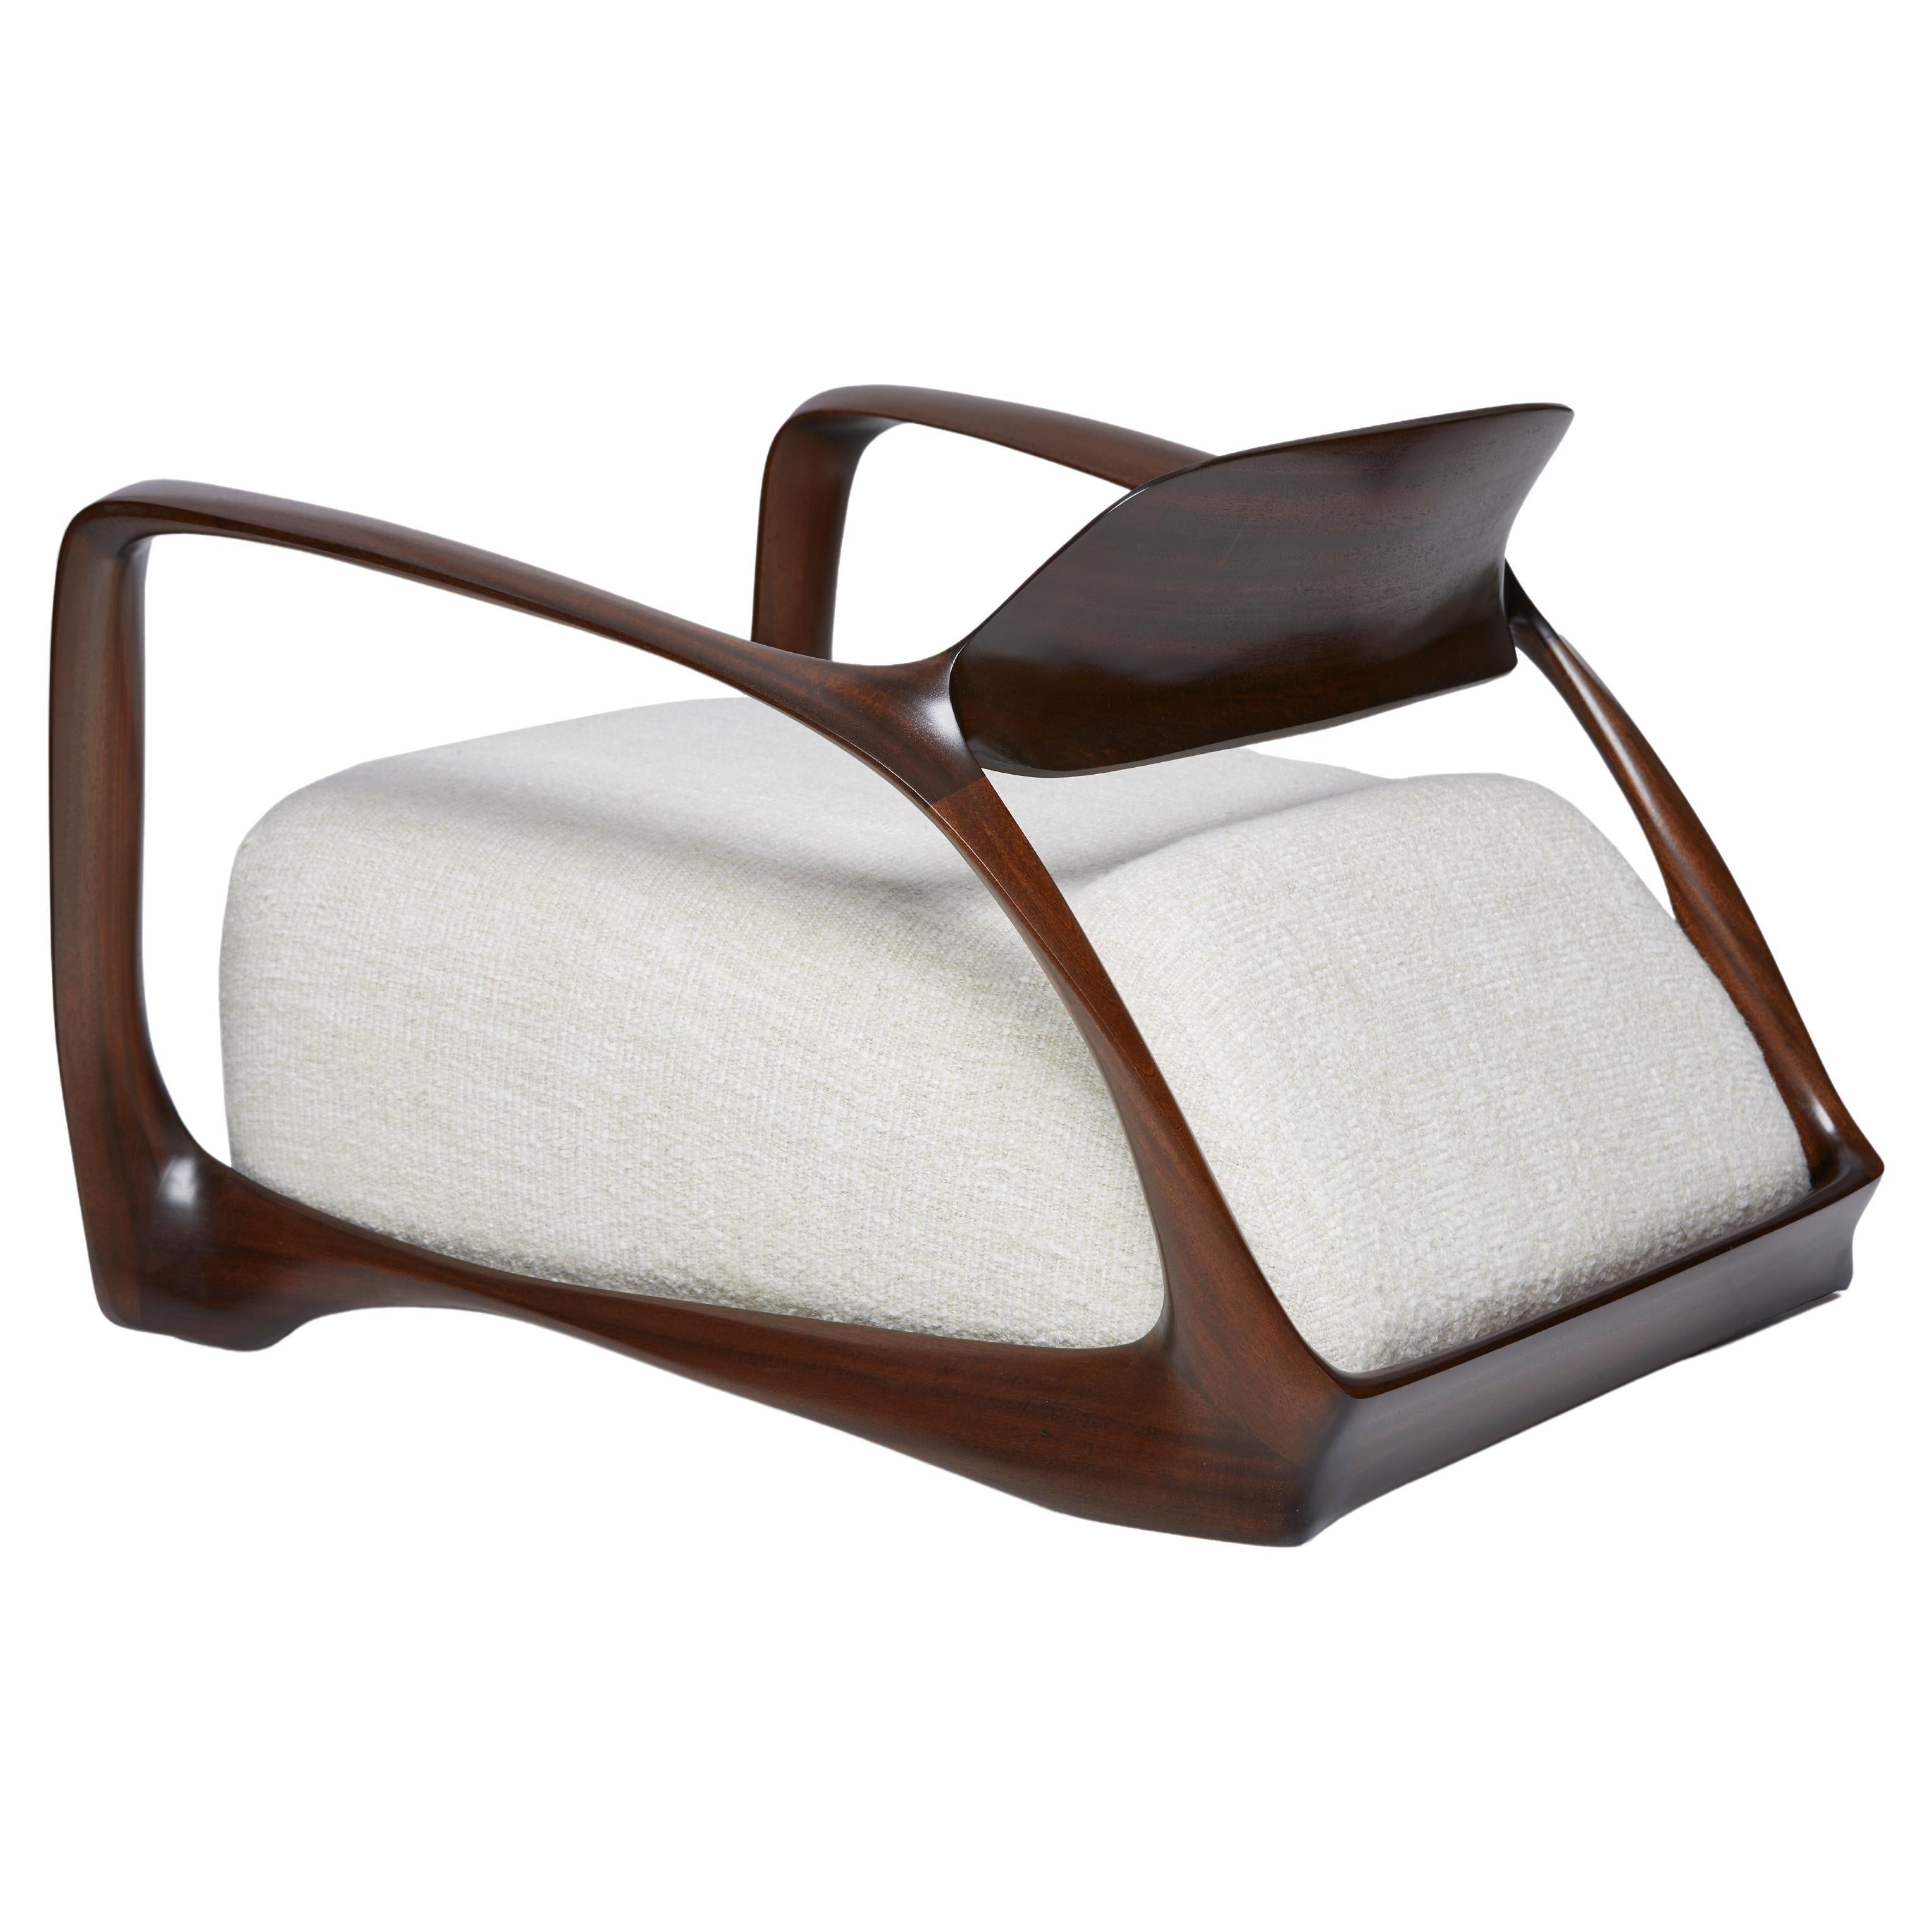 "Model 2" Contemporary Sculptural Lounge Chair, Walnut/Mahogany Wood Tone Finish